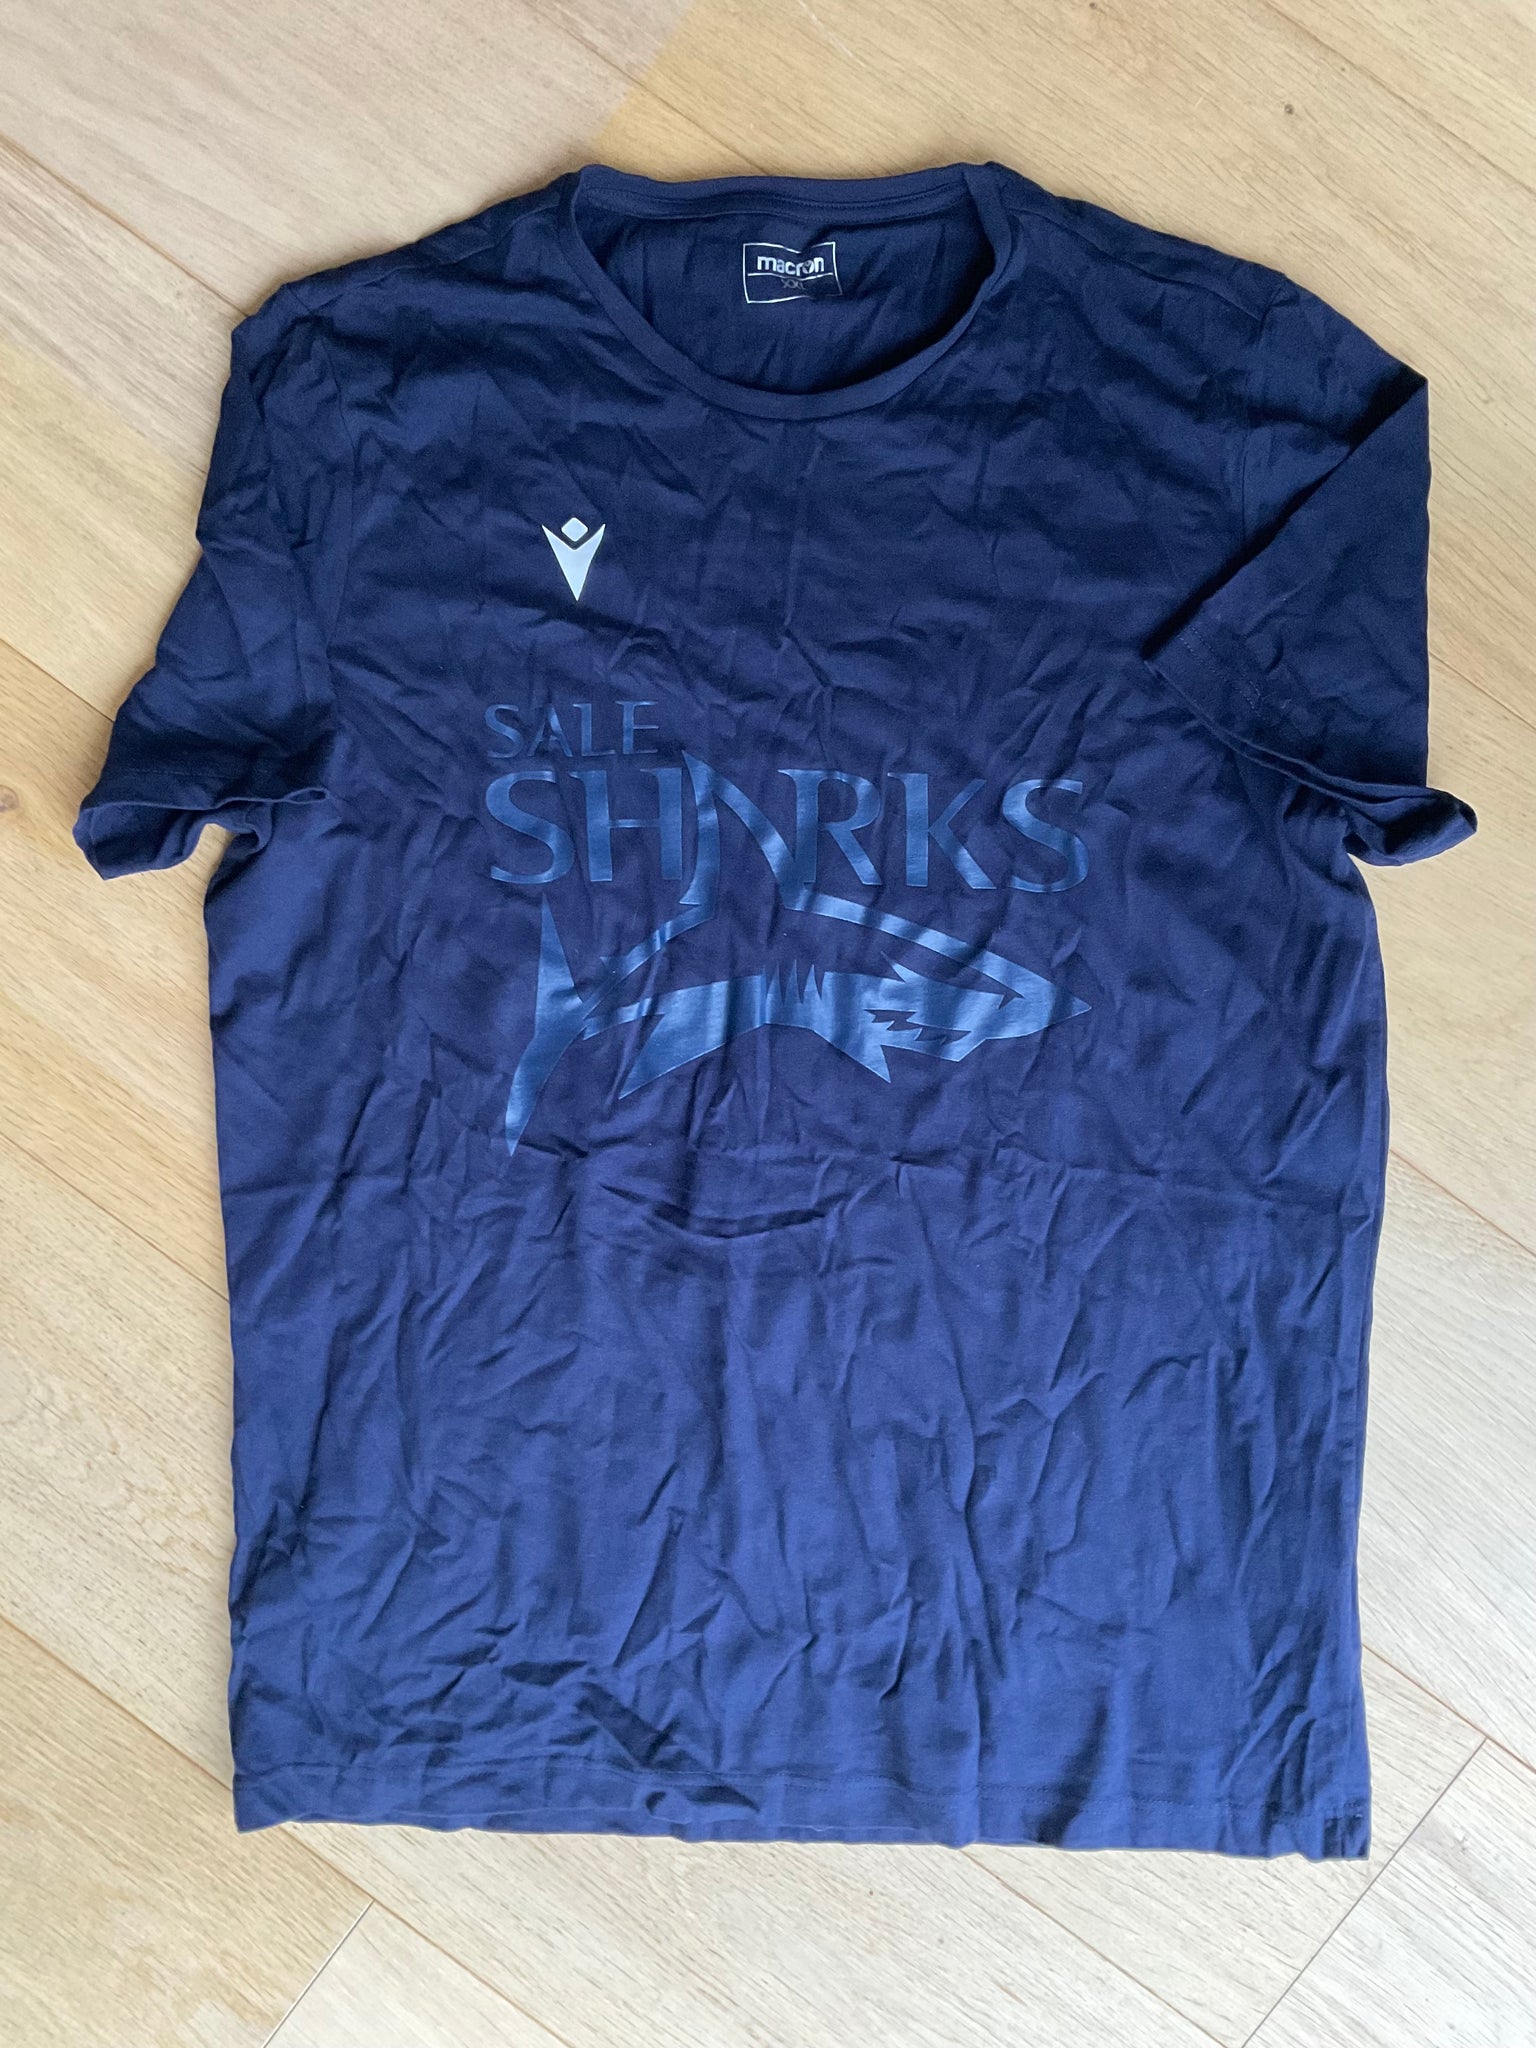 Tommy Taylor - Sale Sharks T-Shirt [Blue]